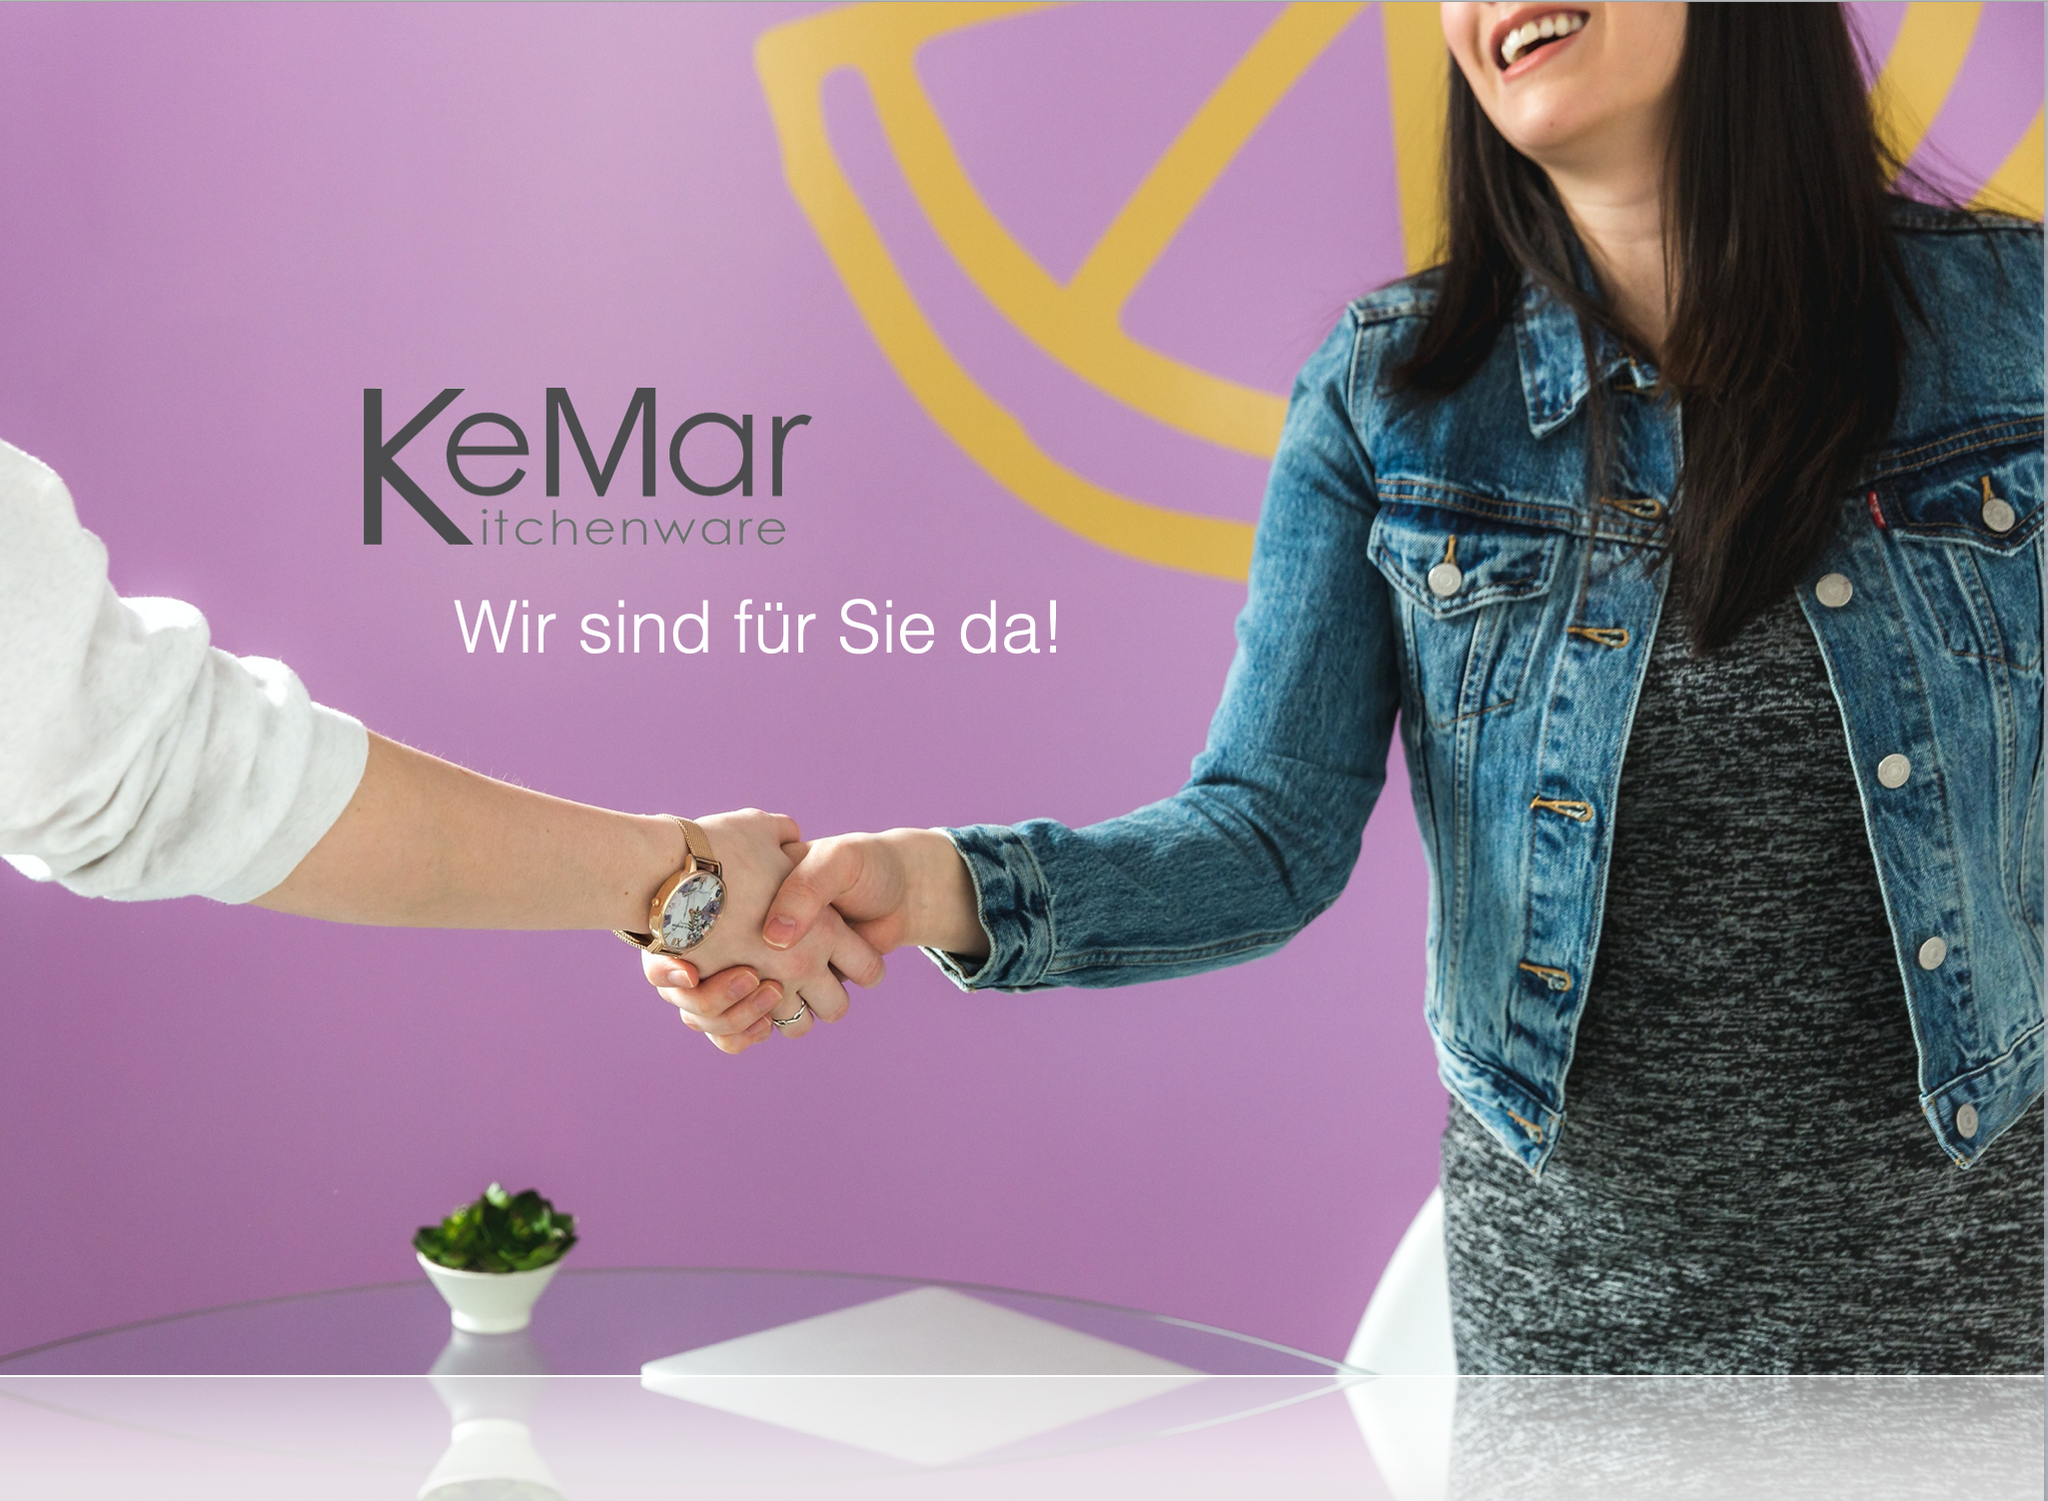 Kontakt KeMar Kitchenware Service Hotline Support Hilfe – KeMar GmbH, Kitchenware